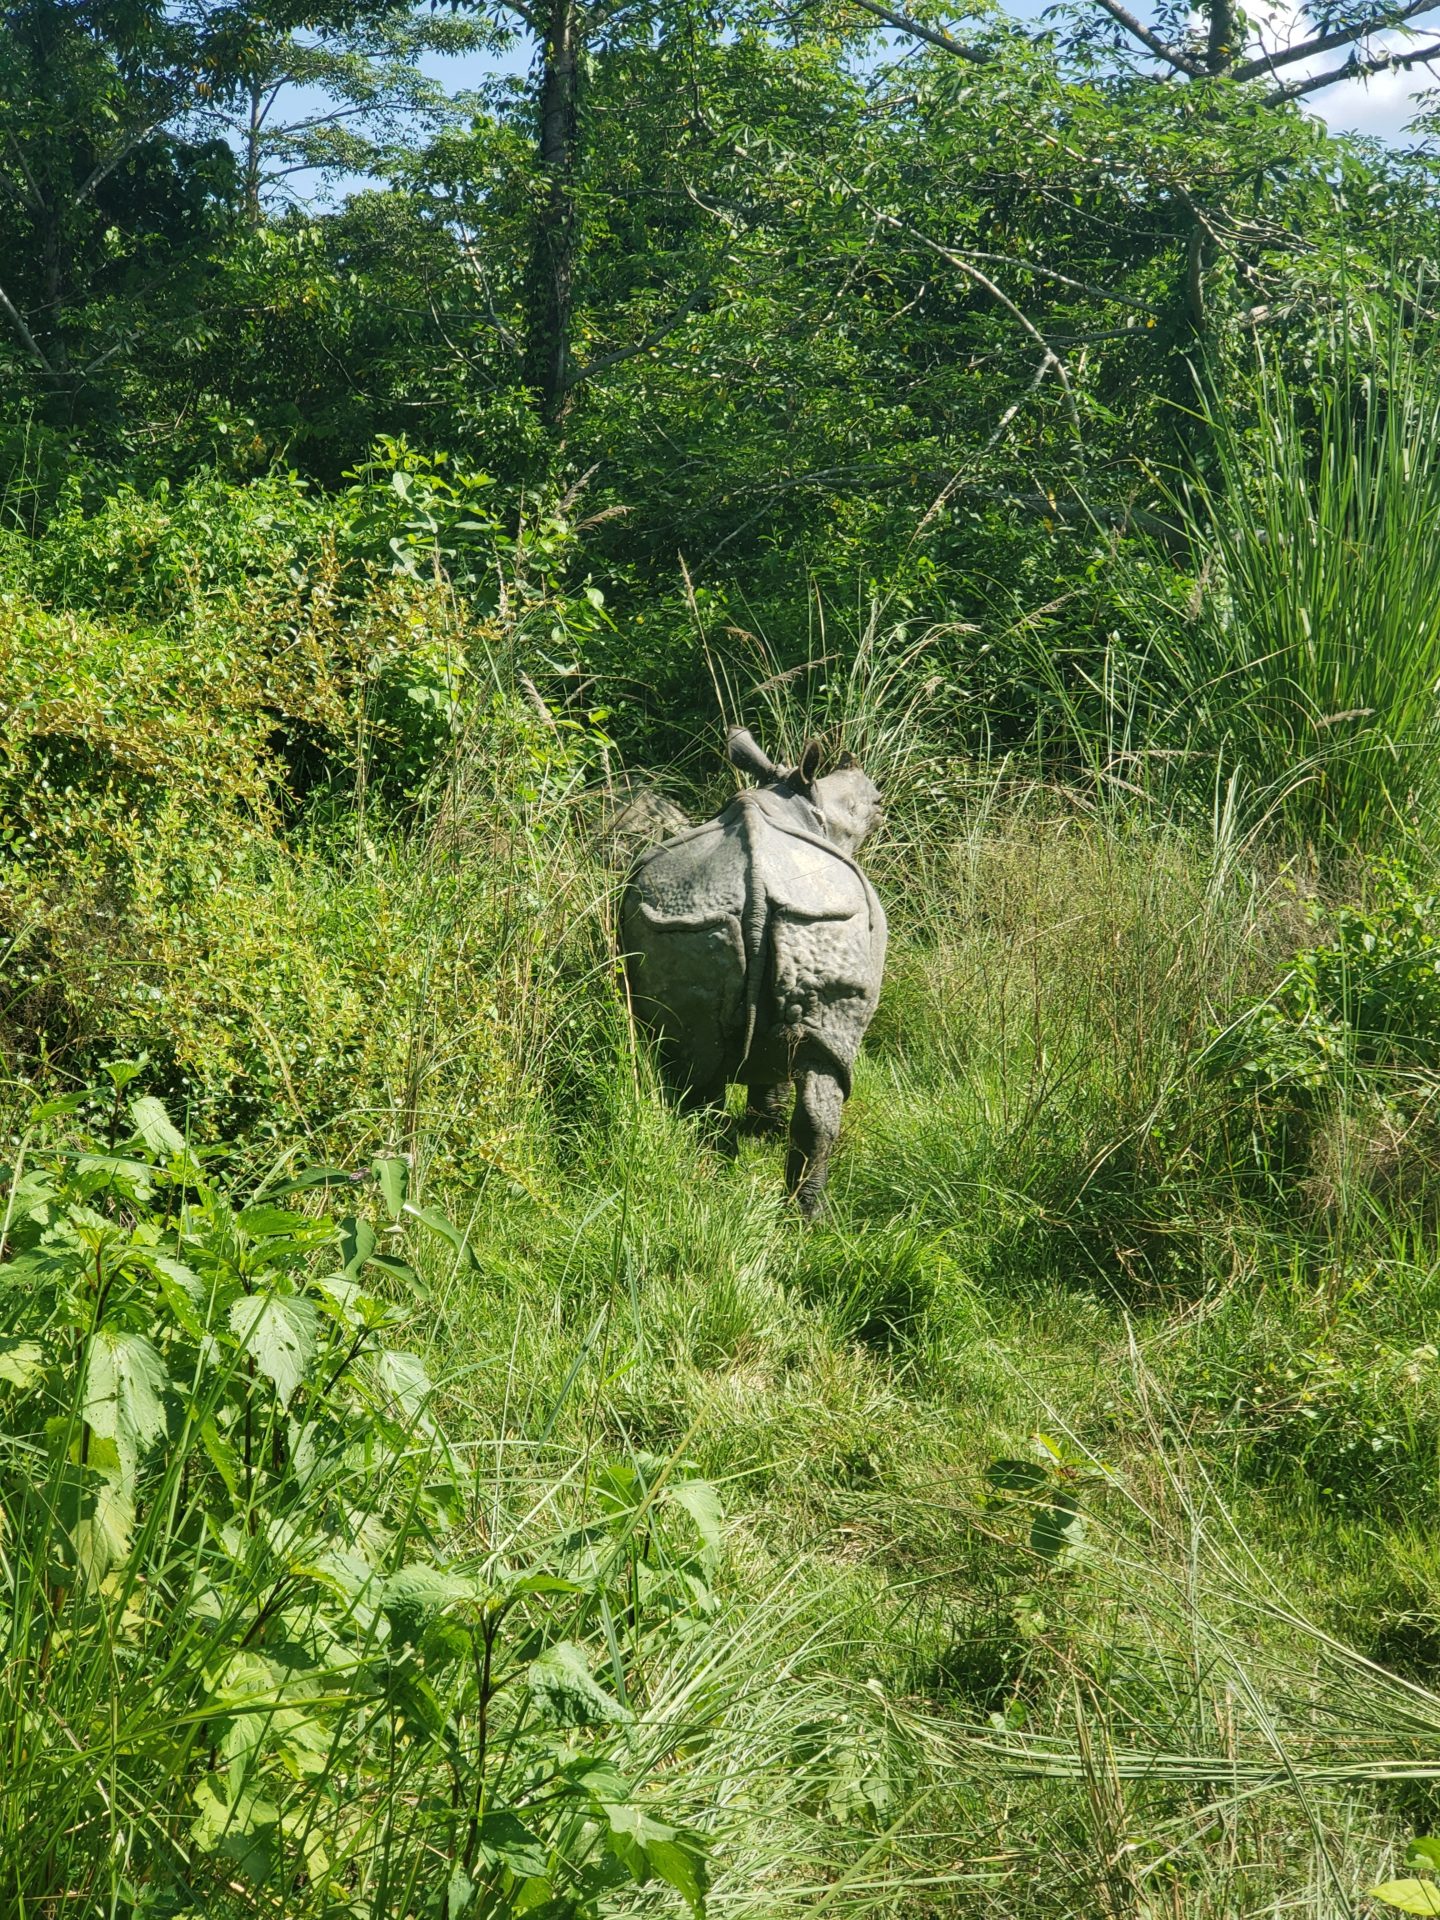 a rhinoceros walking through tall grass